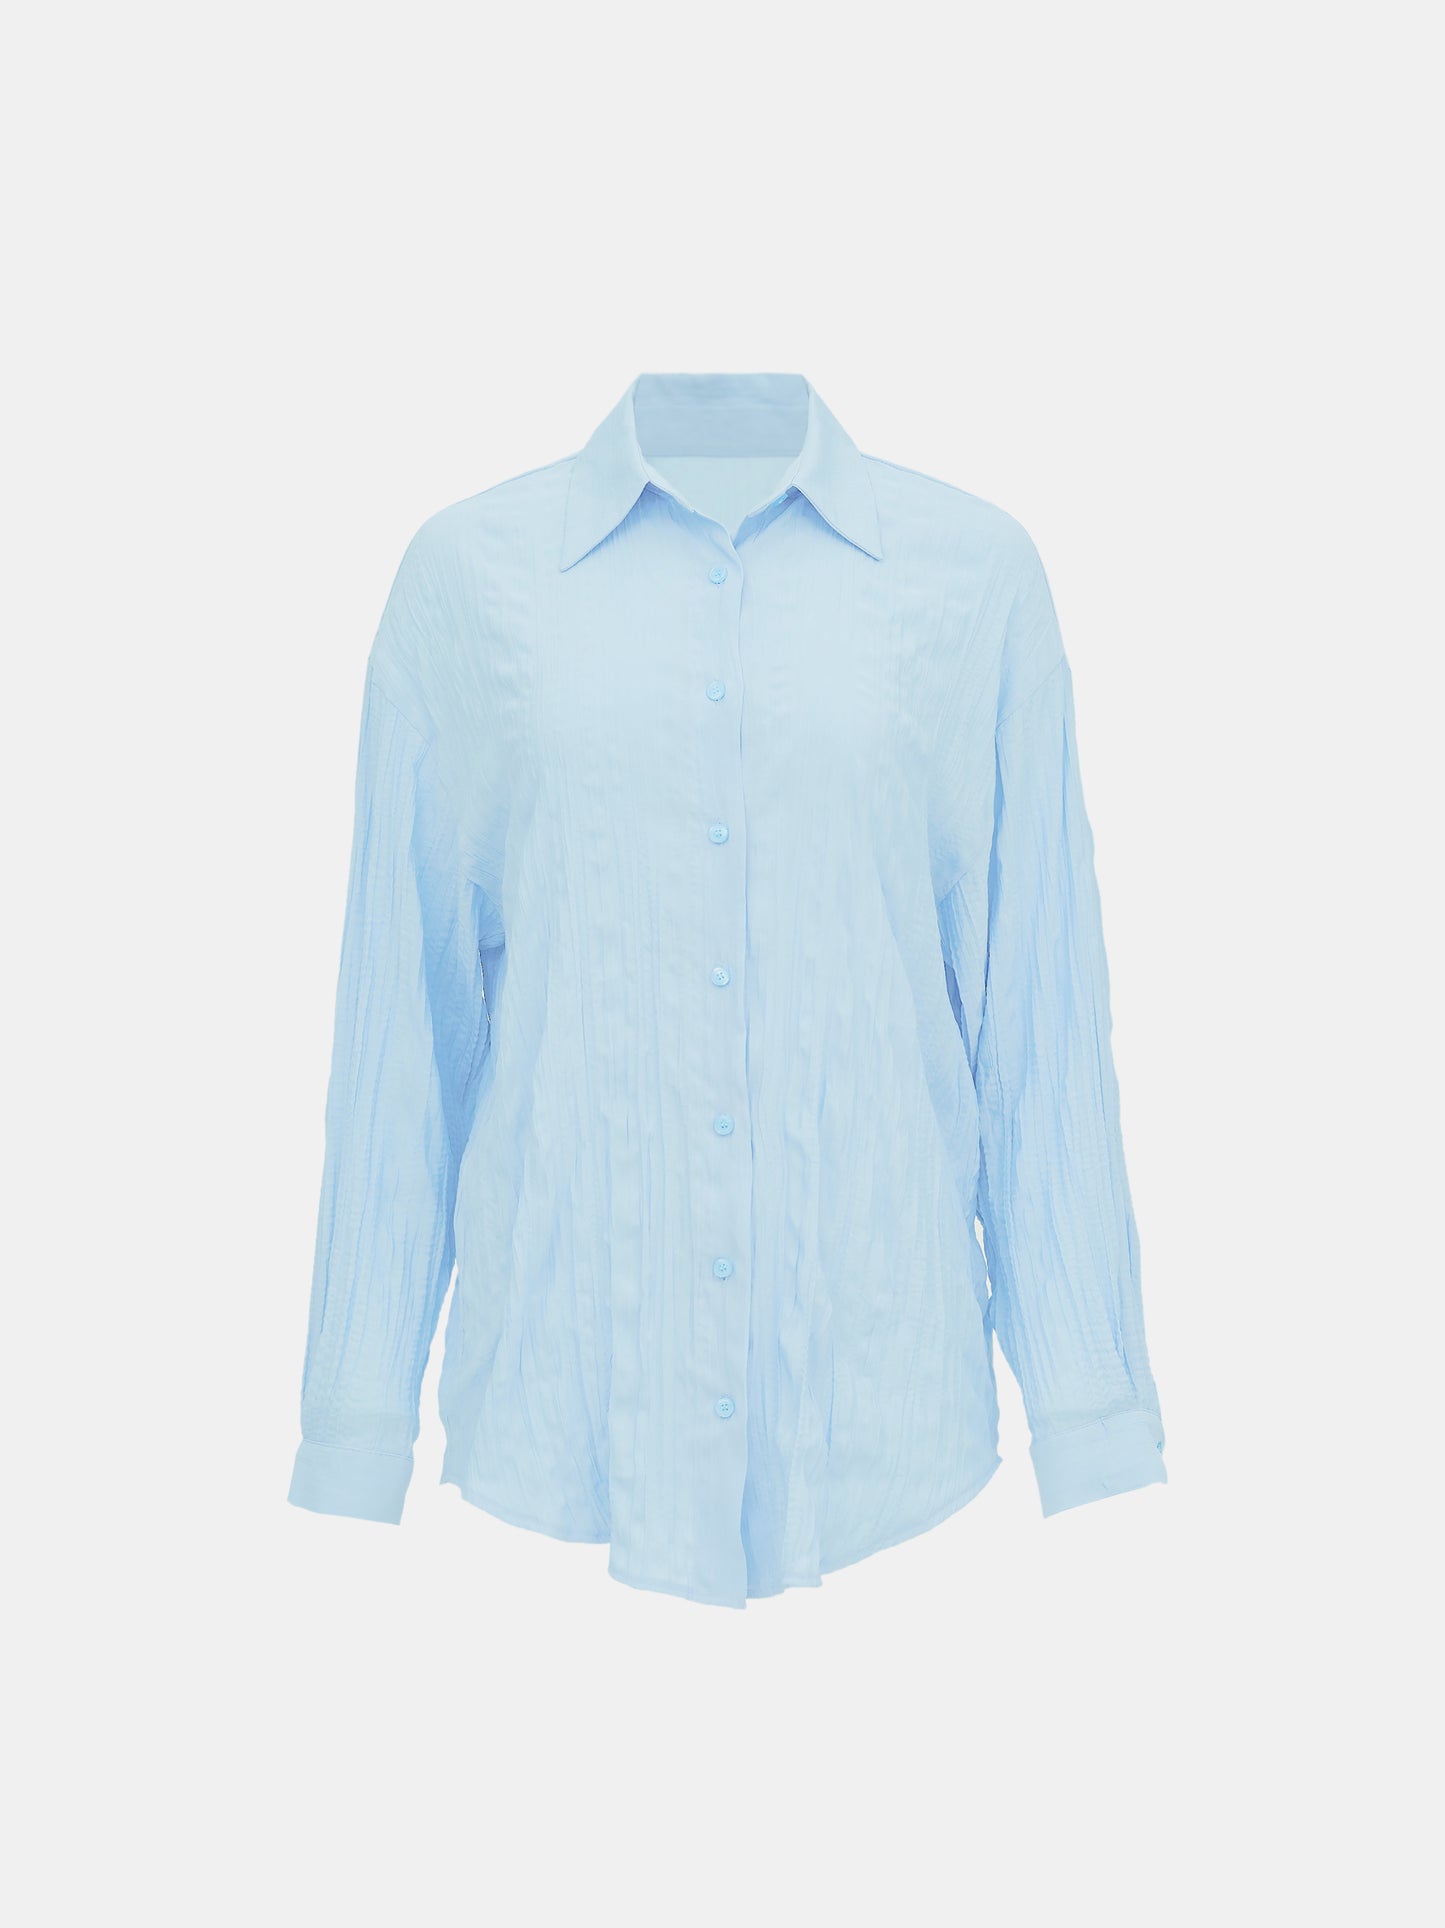 Crinkled Garment-Pleated Shirt, Sky Blue